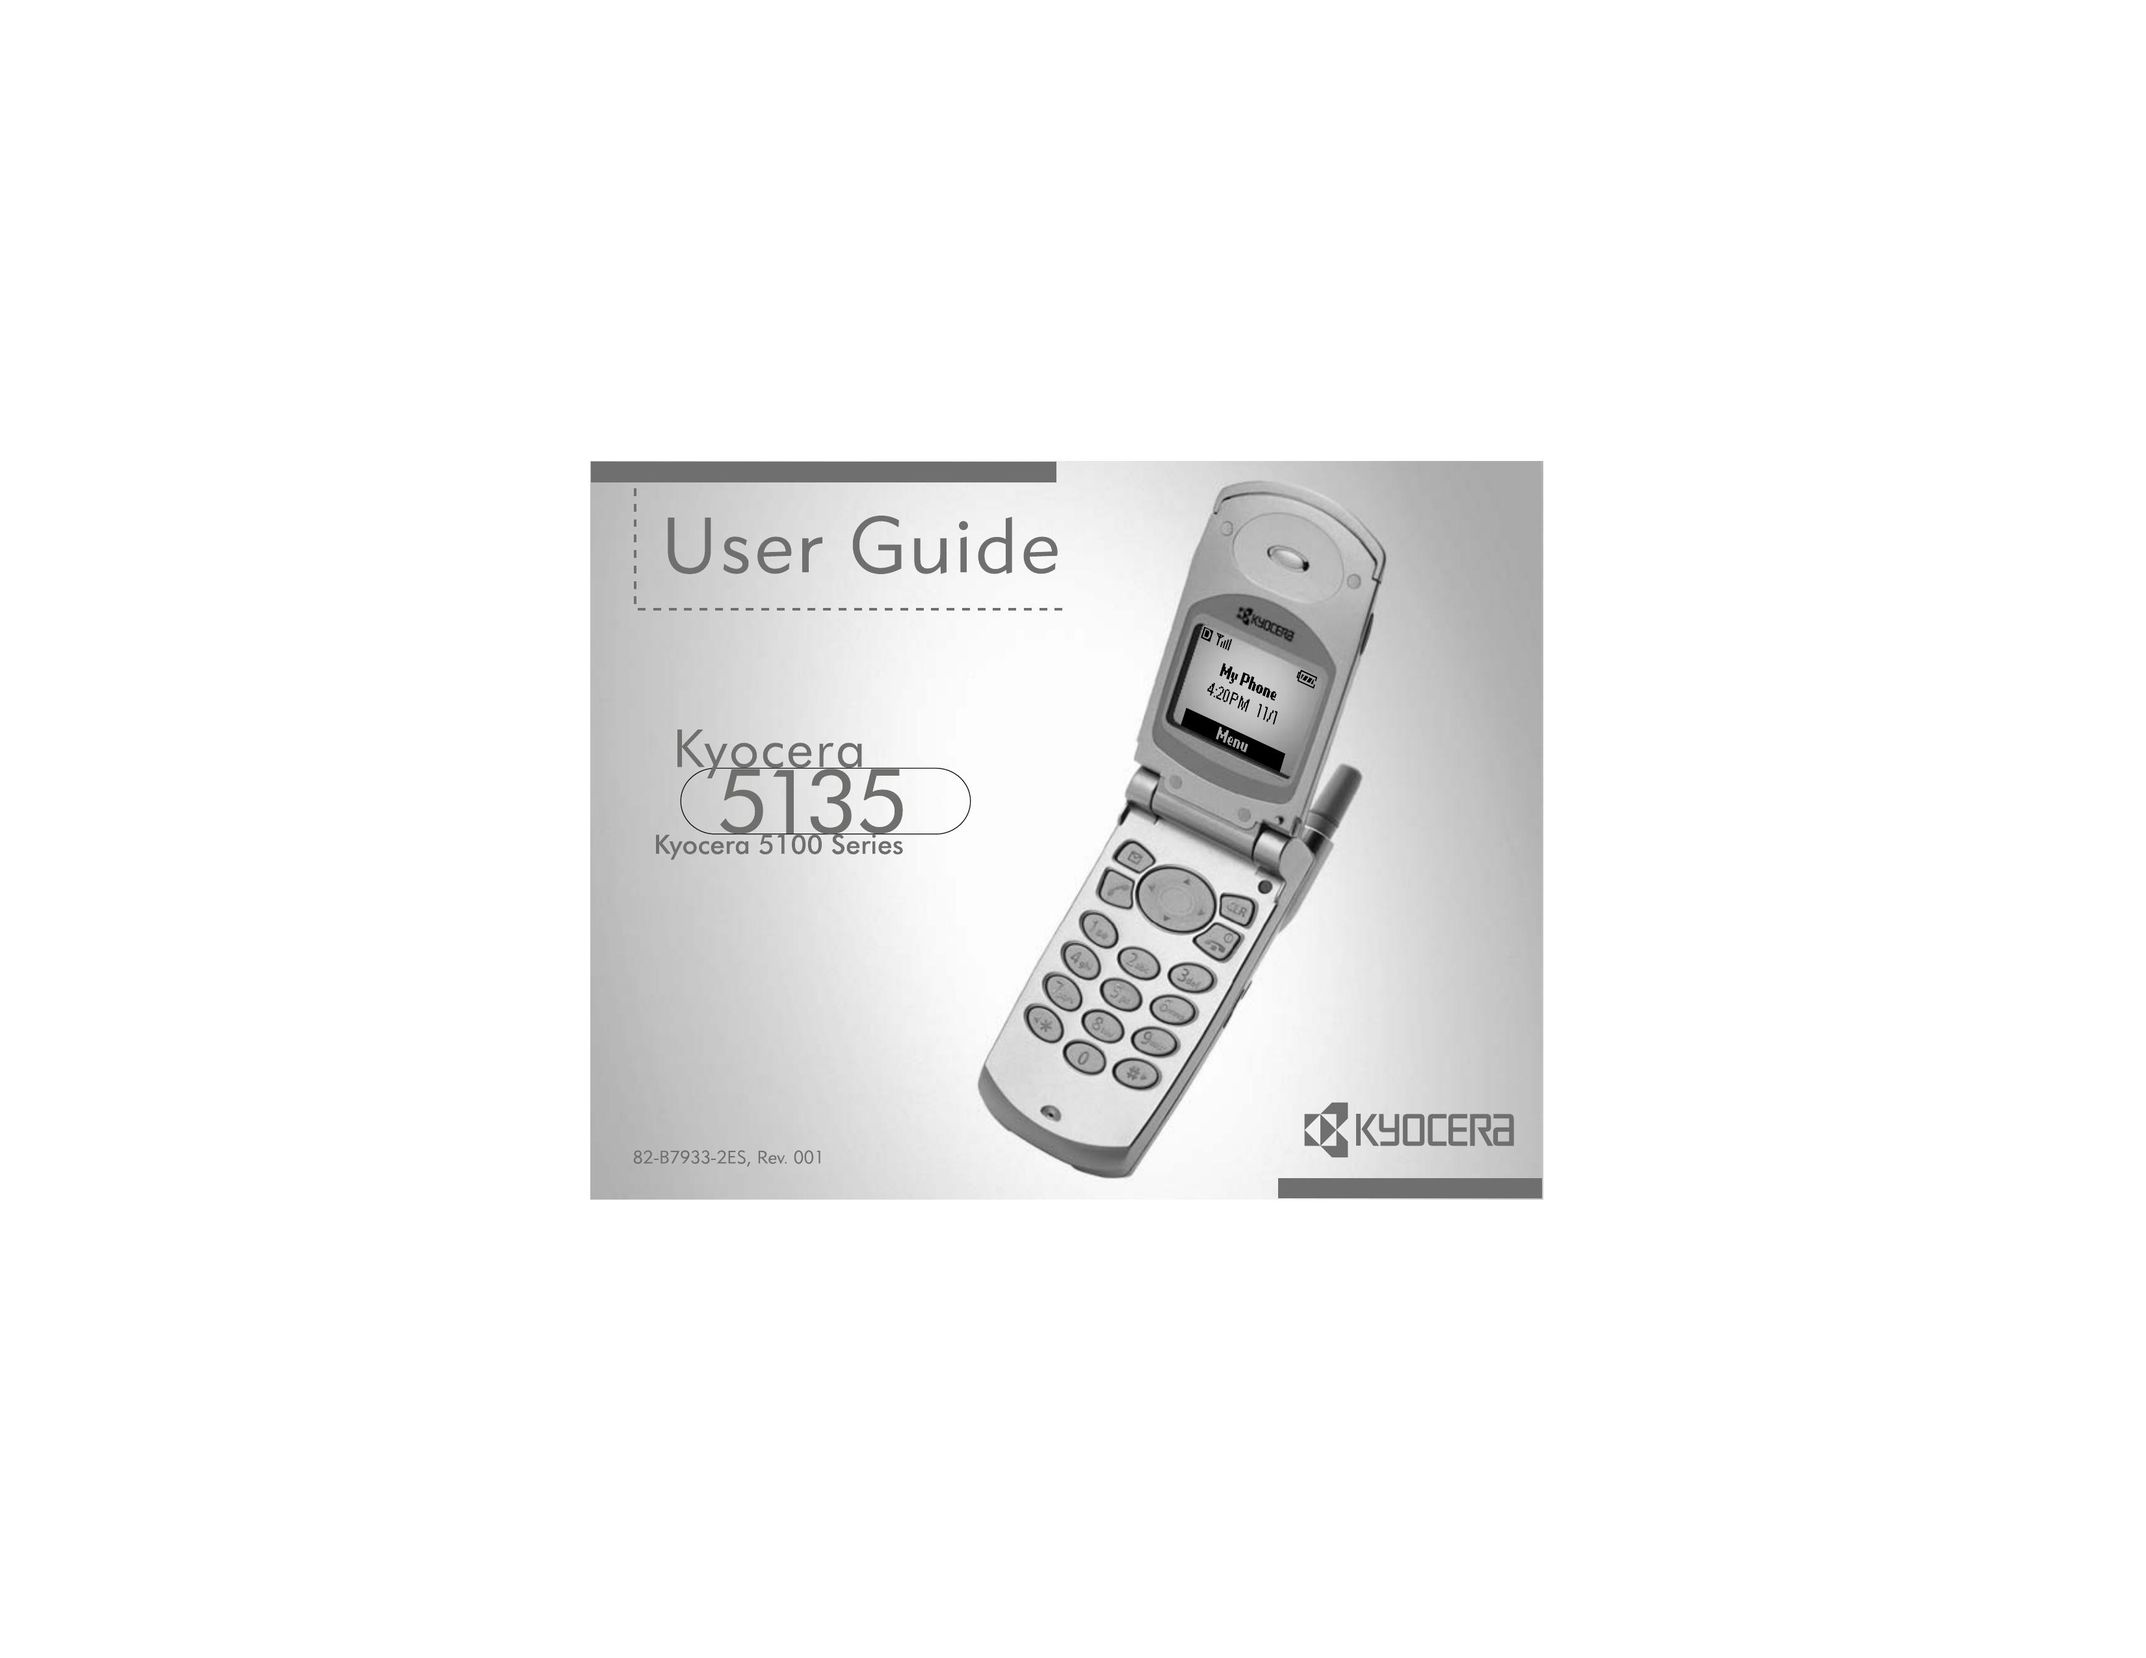 Kyocera 5135 Cell Phone User Manual